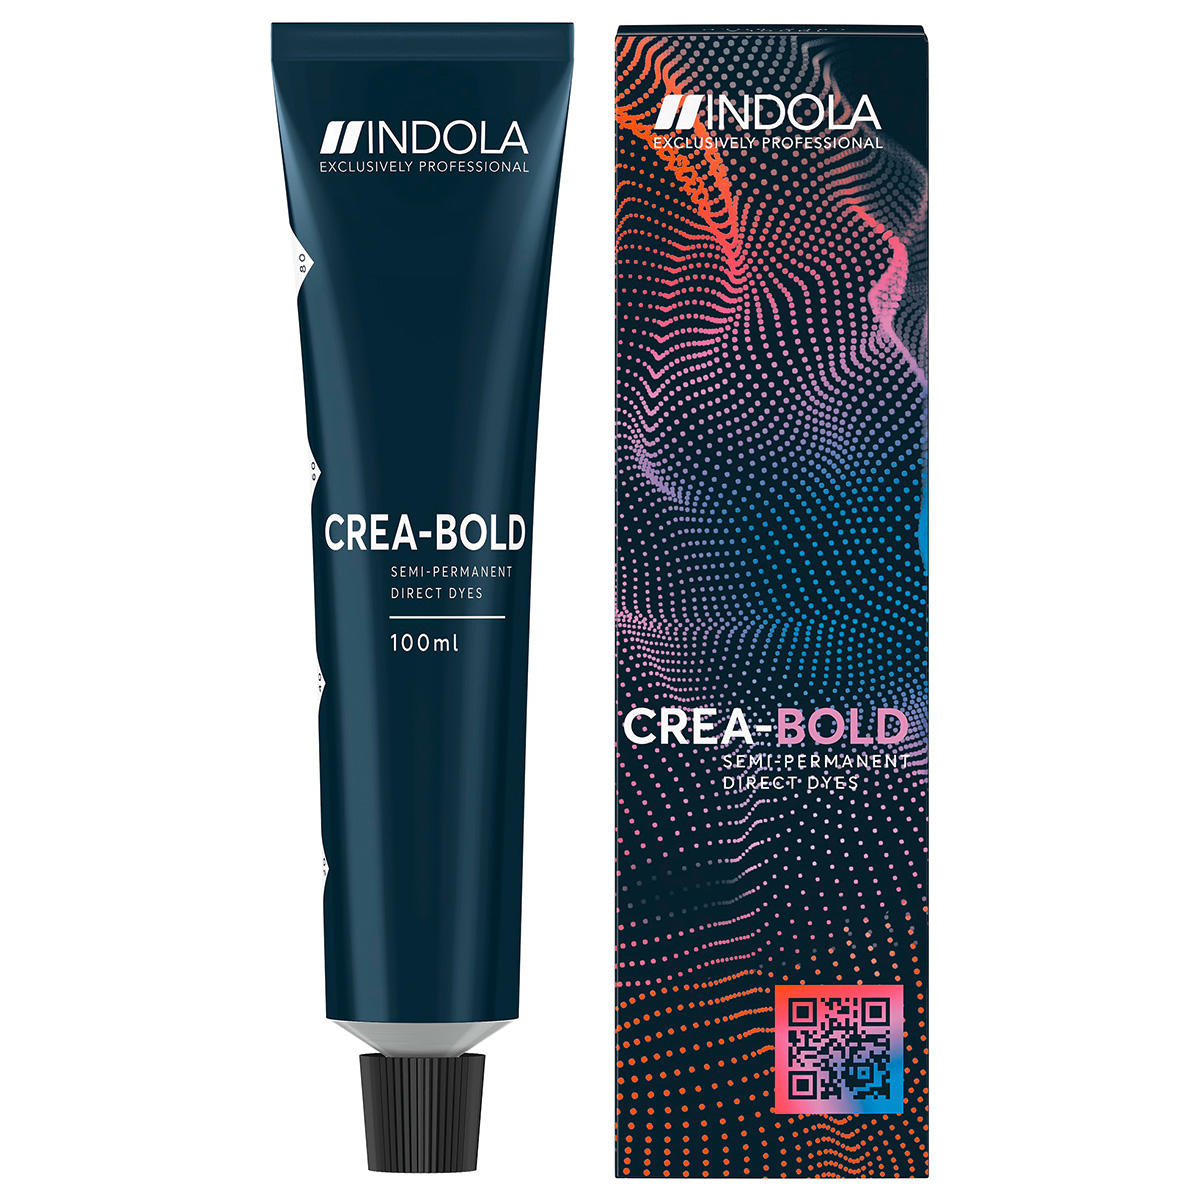 Indola CREA-BOLD Semi-Permanent Direct Dyes Kanariengelb 100 ml - 2